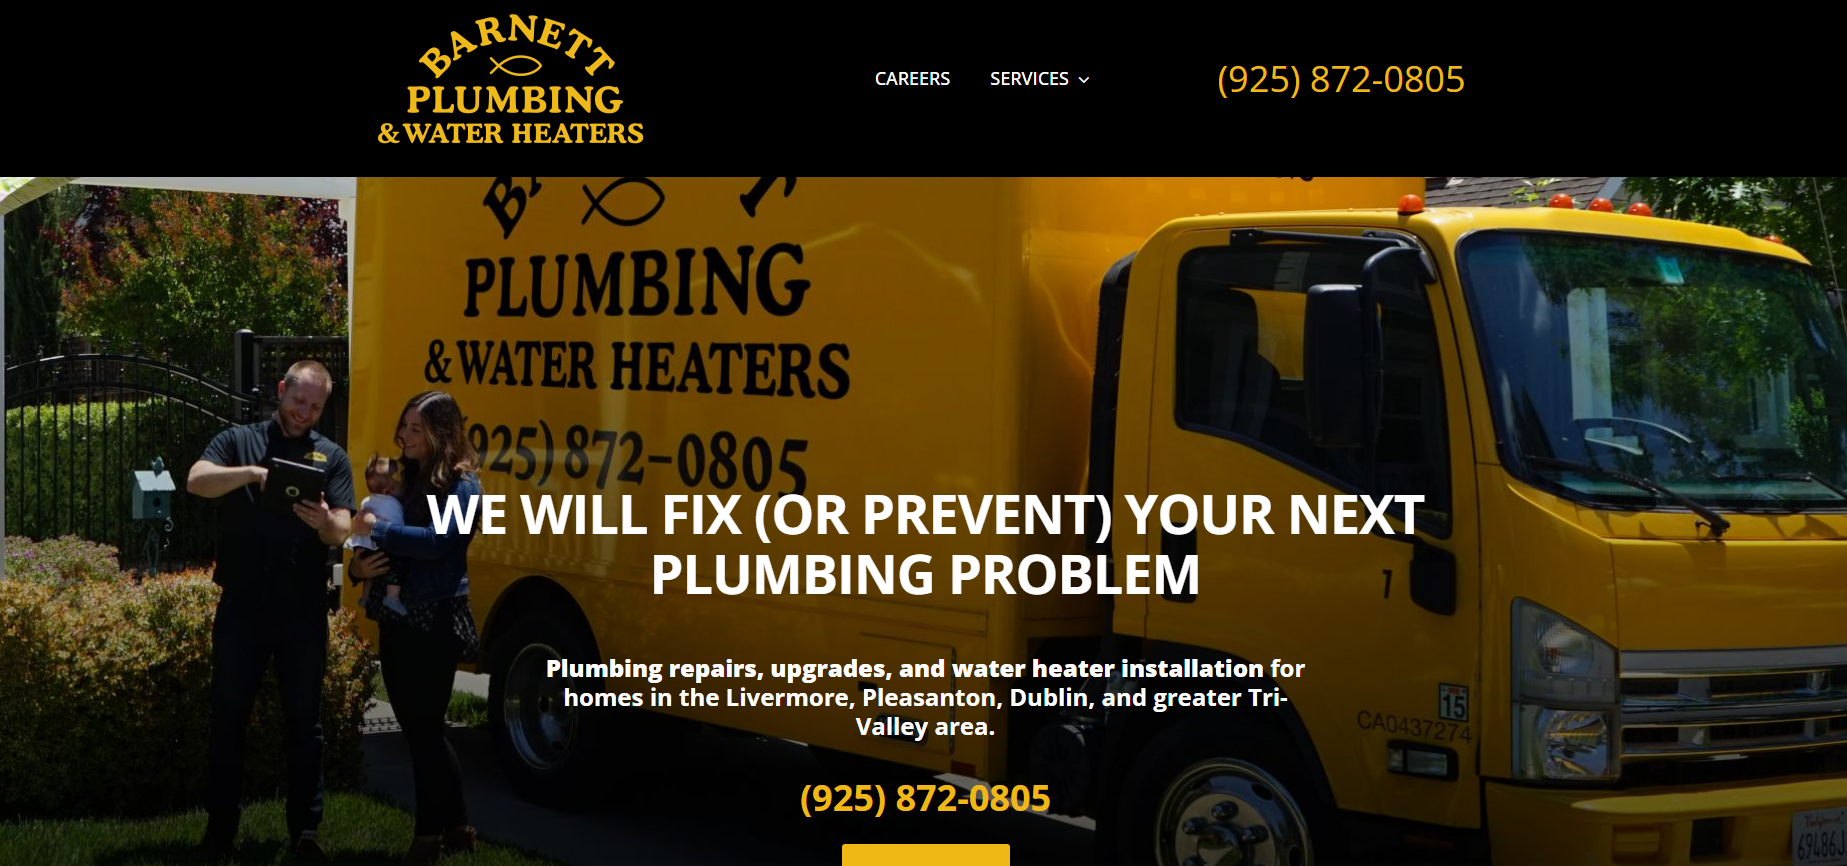 Website of Barnett Plumbing and Water Heaters in Fremont, CA